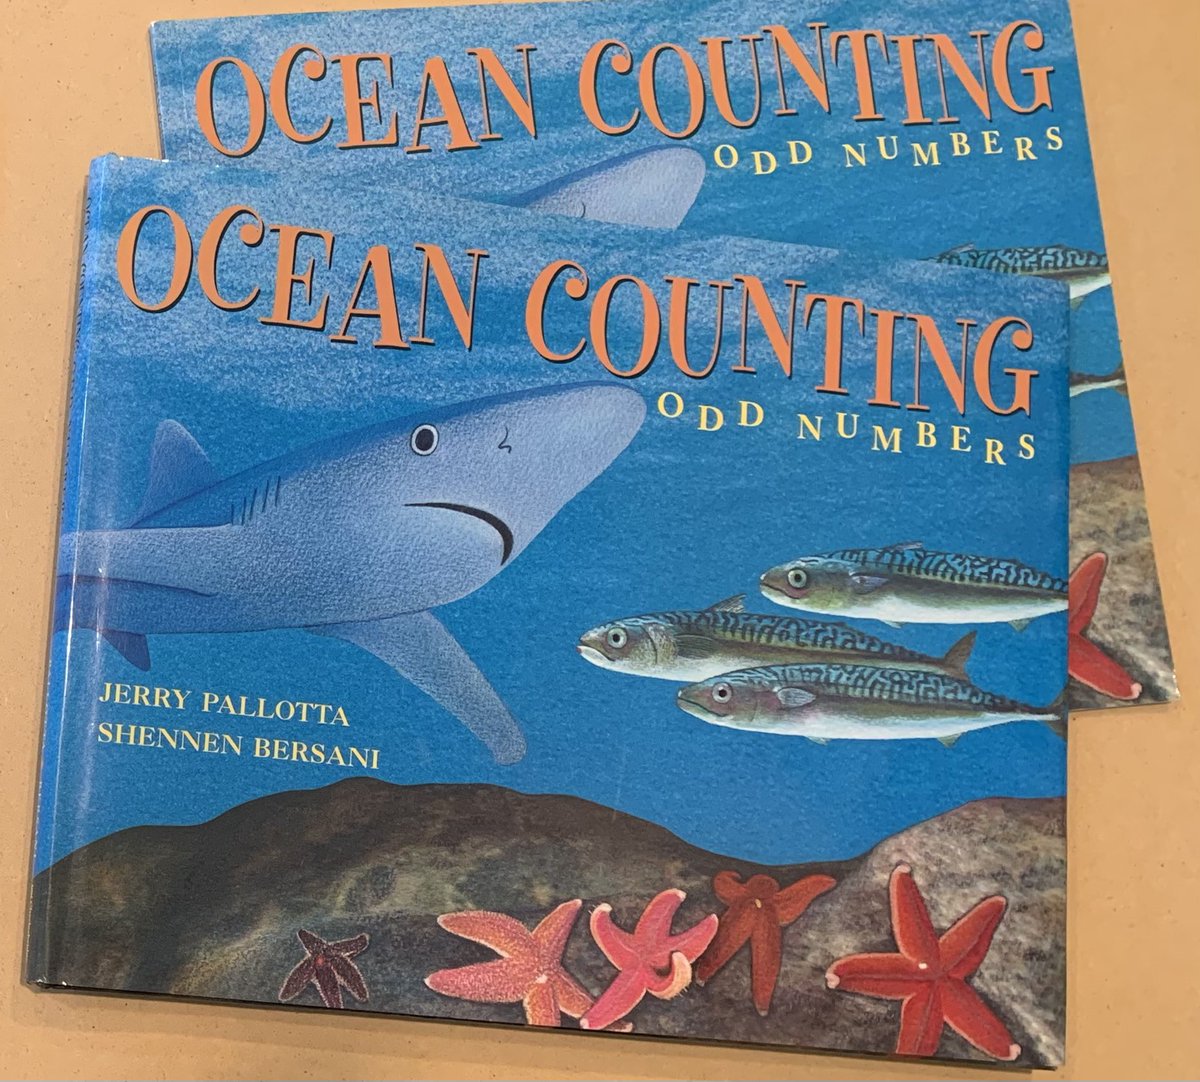 I’ve got a book for that! Ocean Counting: Odd Numbers @jerrypallotta @charlesbridge #illustrator #kidslit 🎨📚